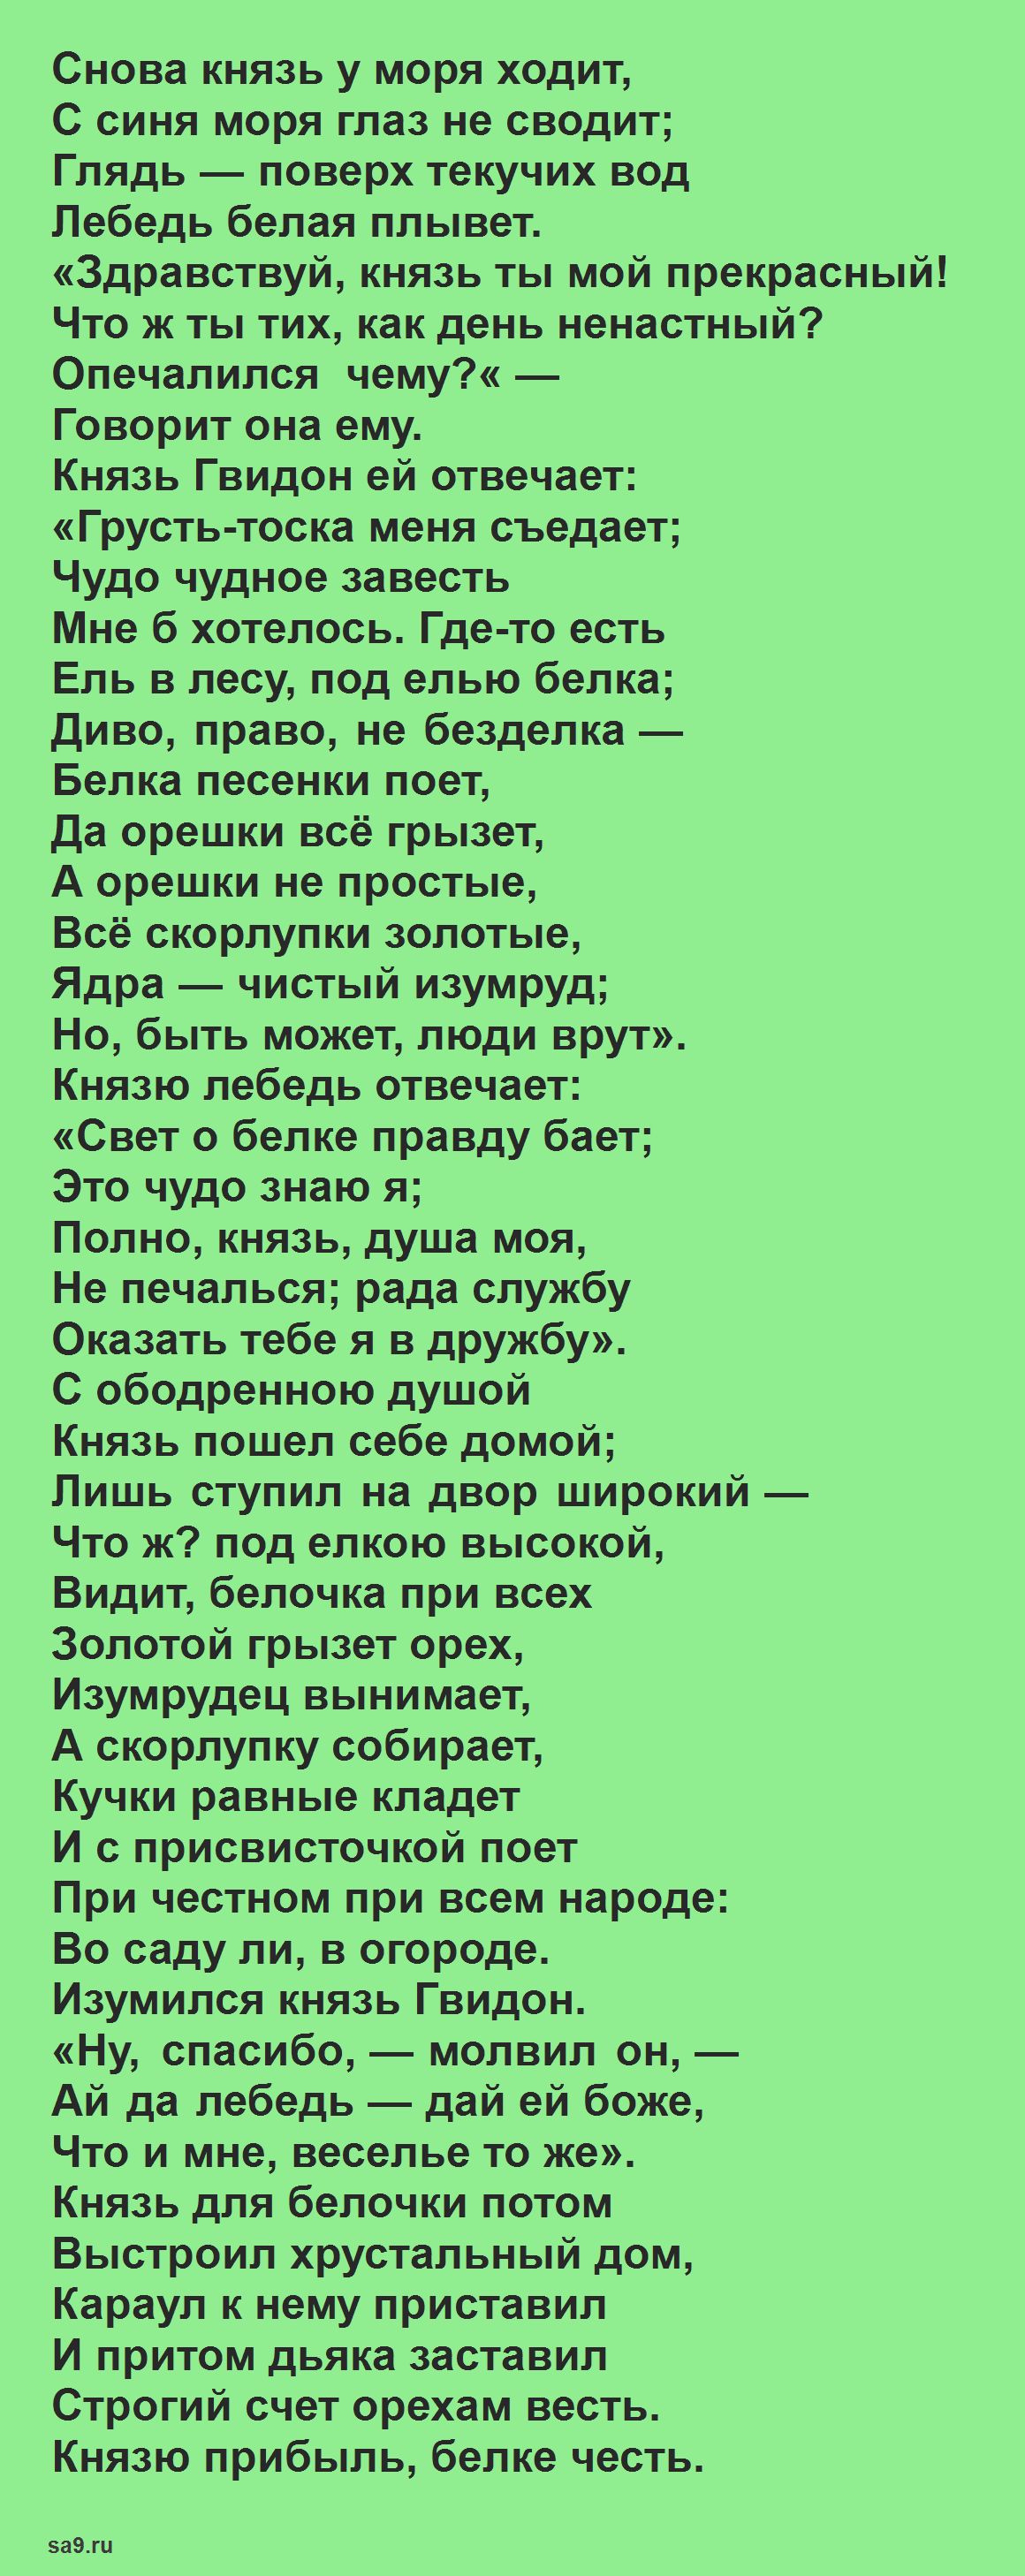 Читать интересную сказку 'О царе Салтане', Александр Сергеевич Пушкин 